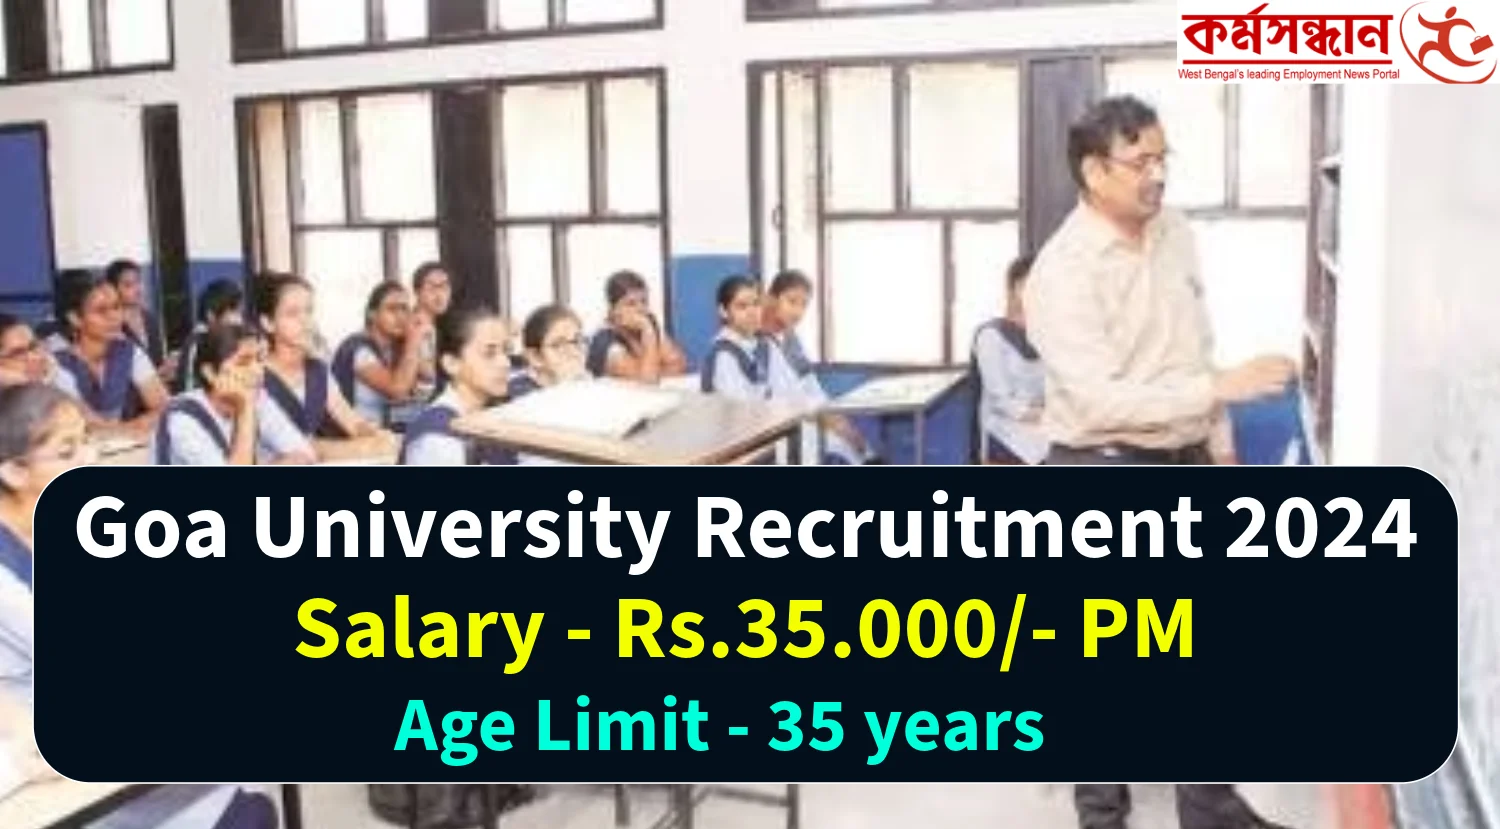 Goa University Recruitment 2024 for Associate and Technician Posts